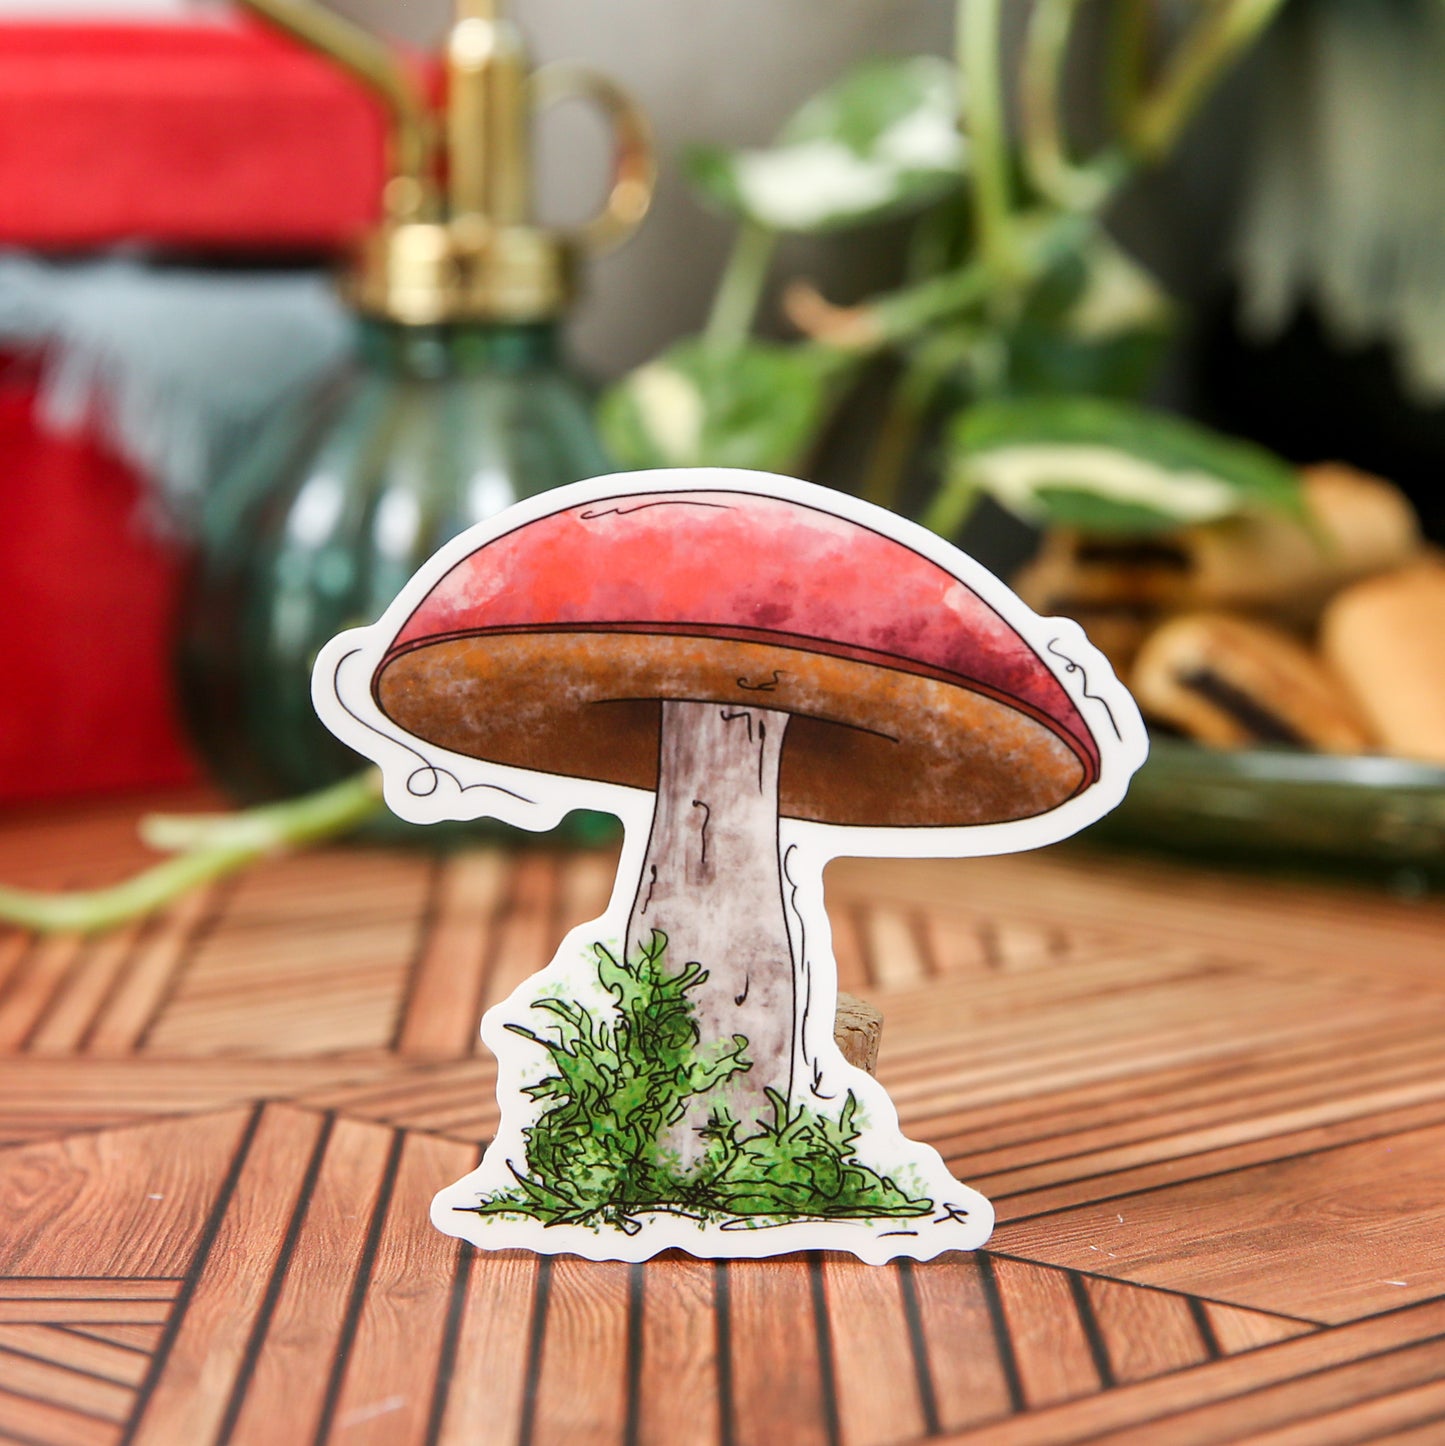 Mushroom, Red Top - Sticker